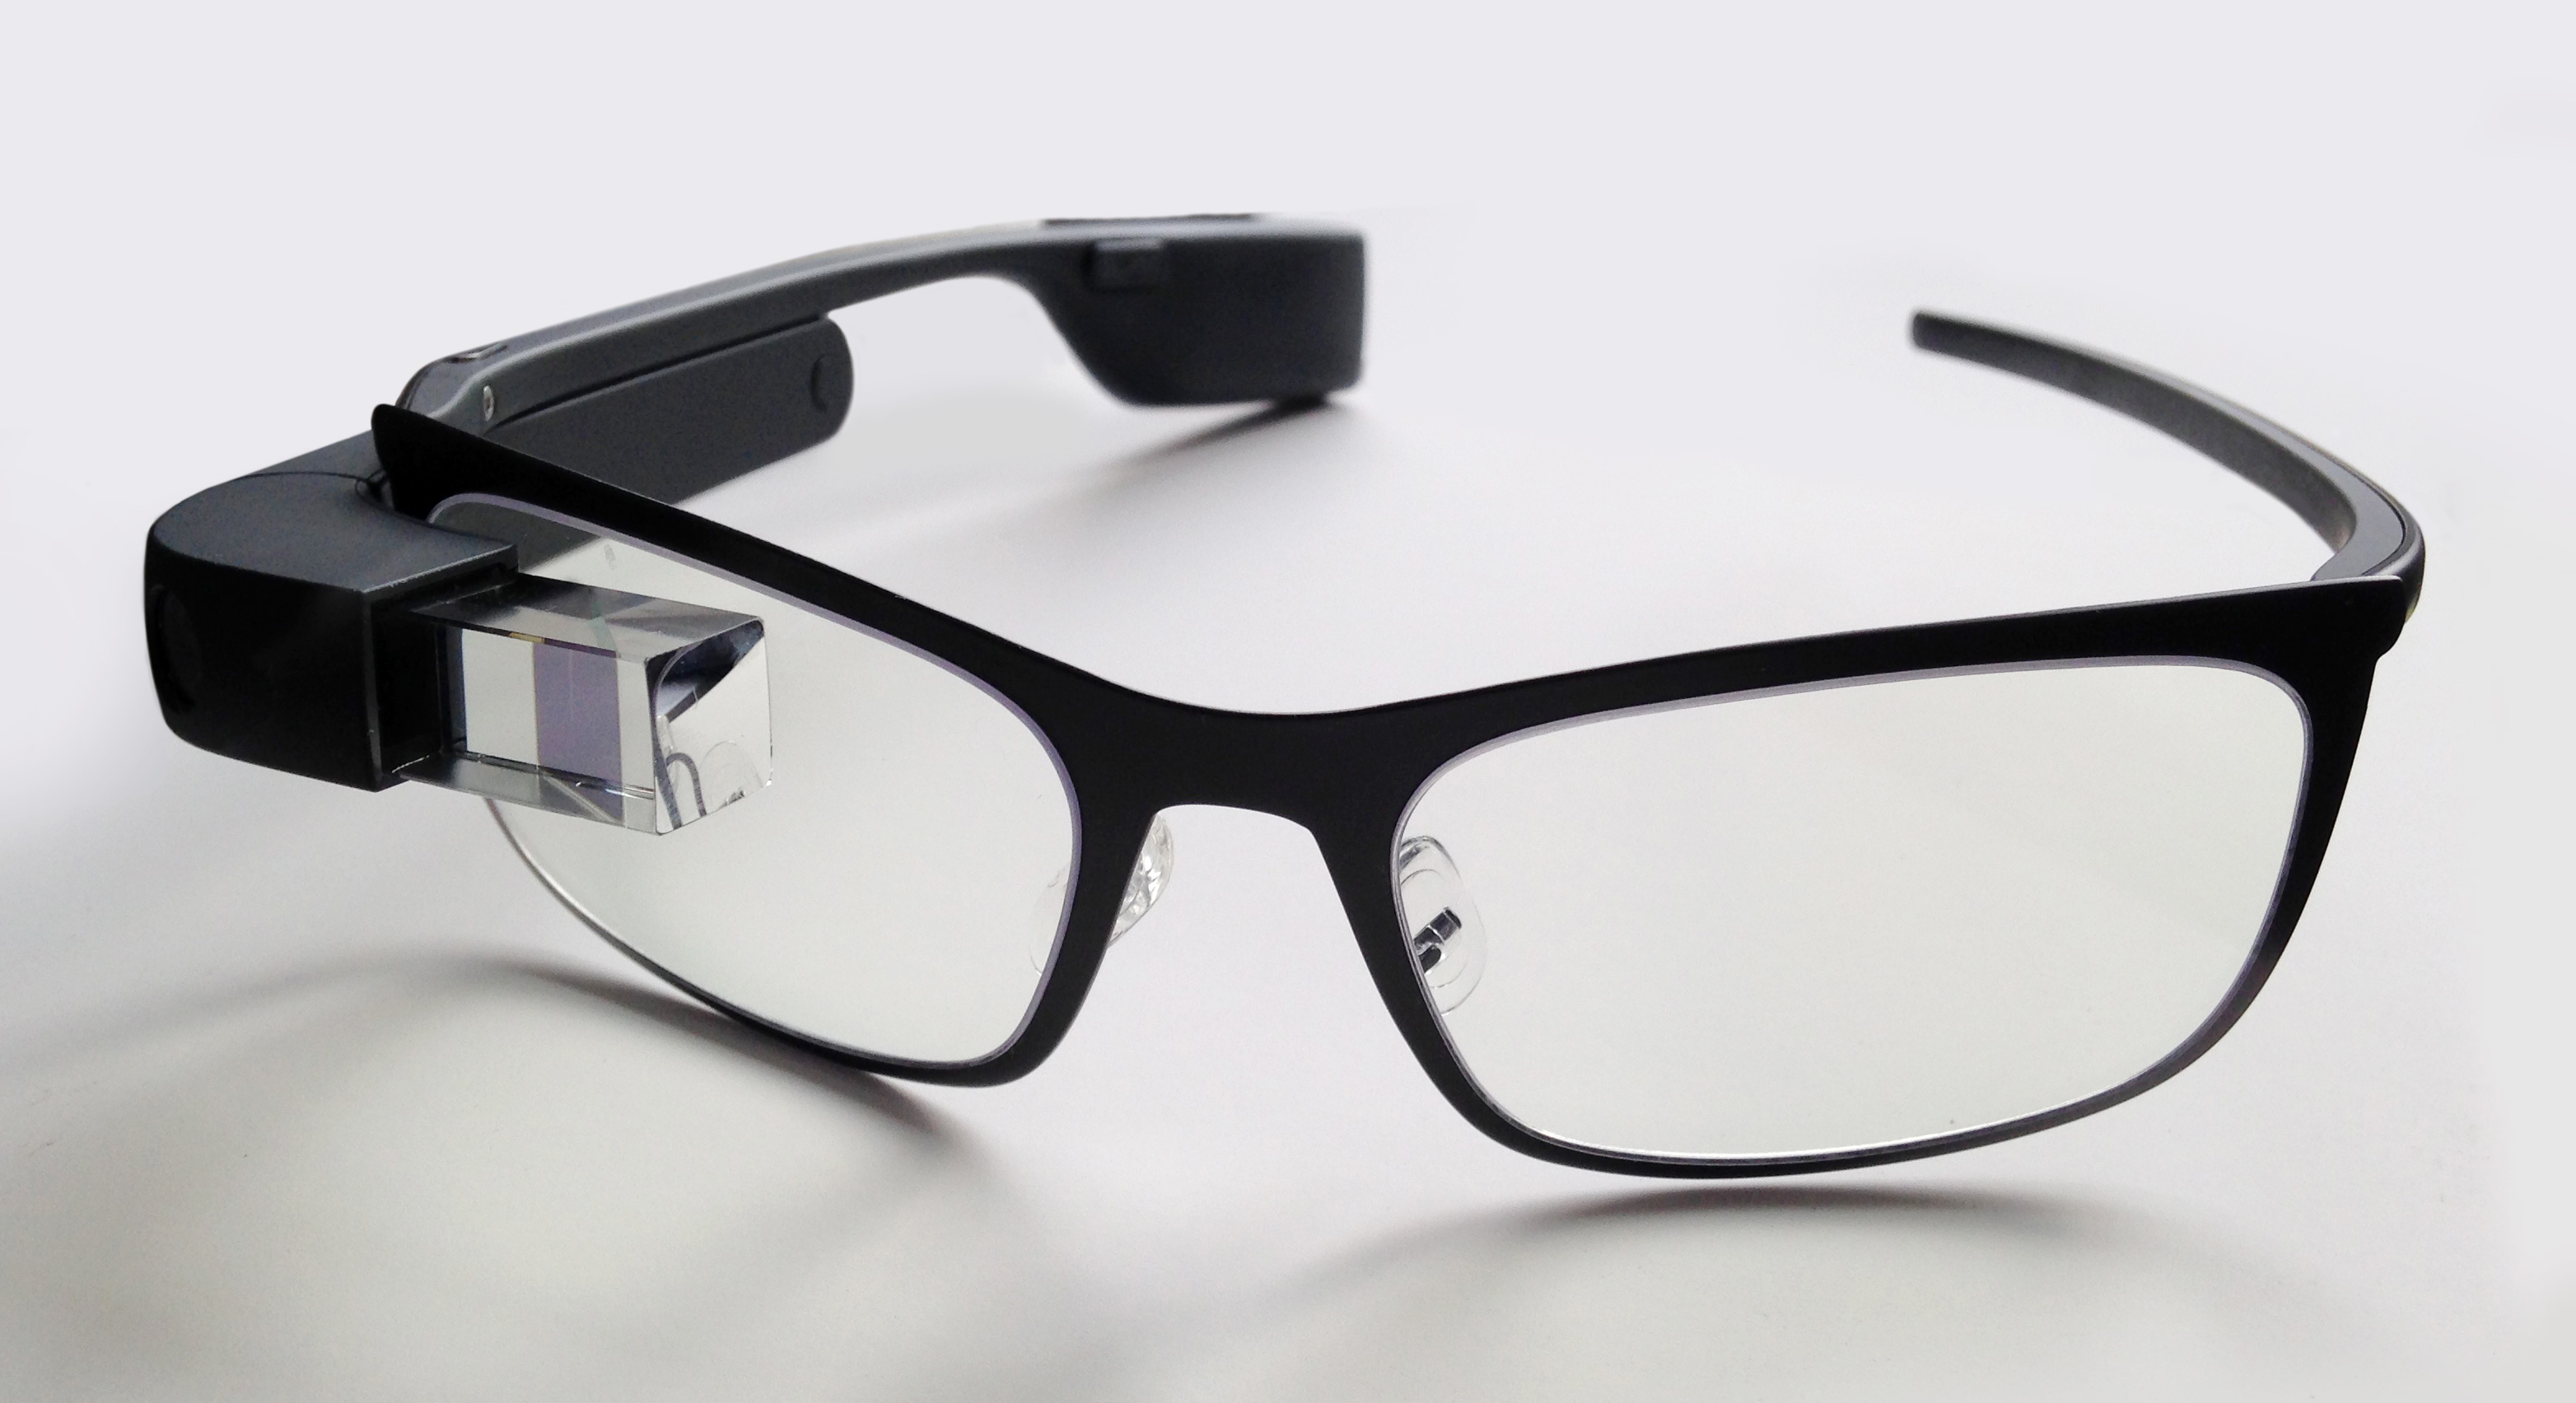 Smart glasses by Google